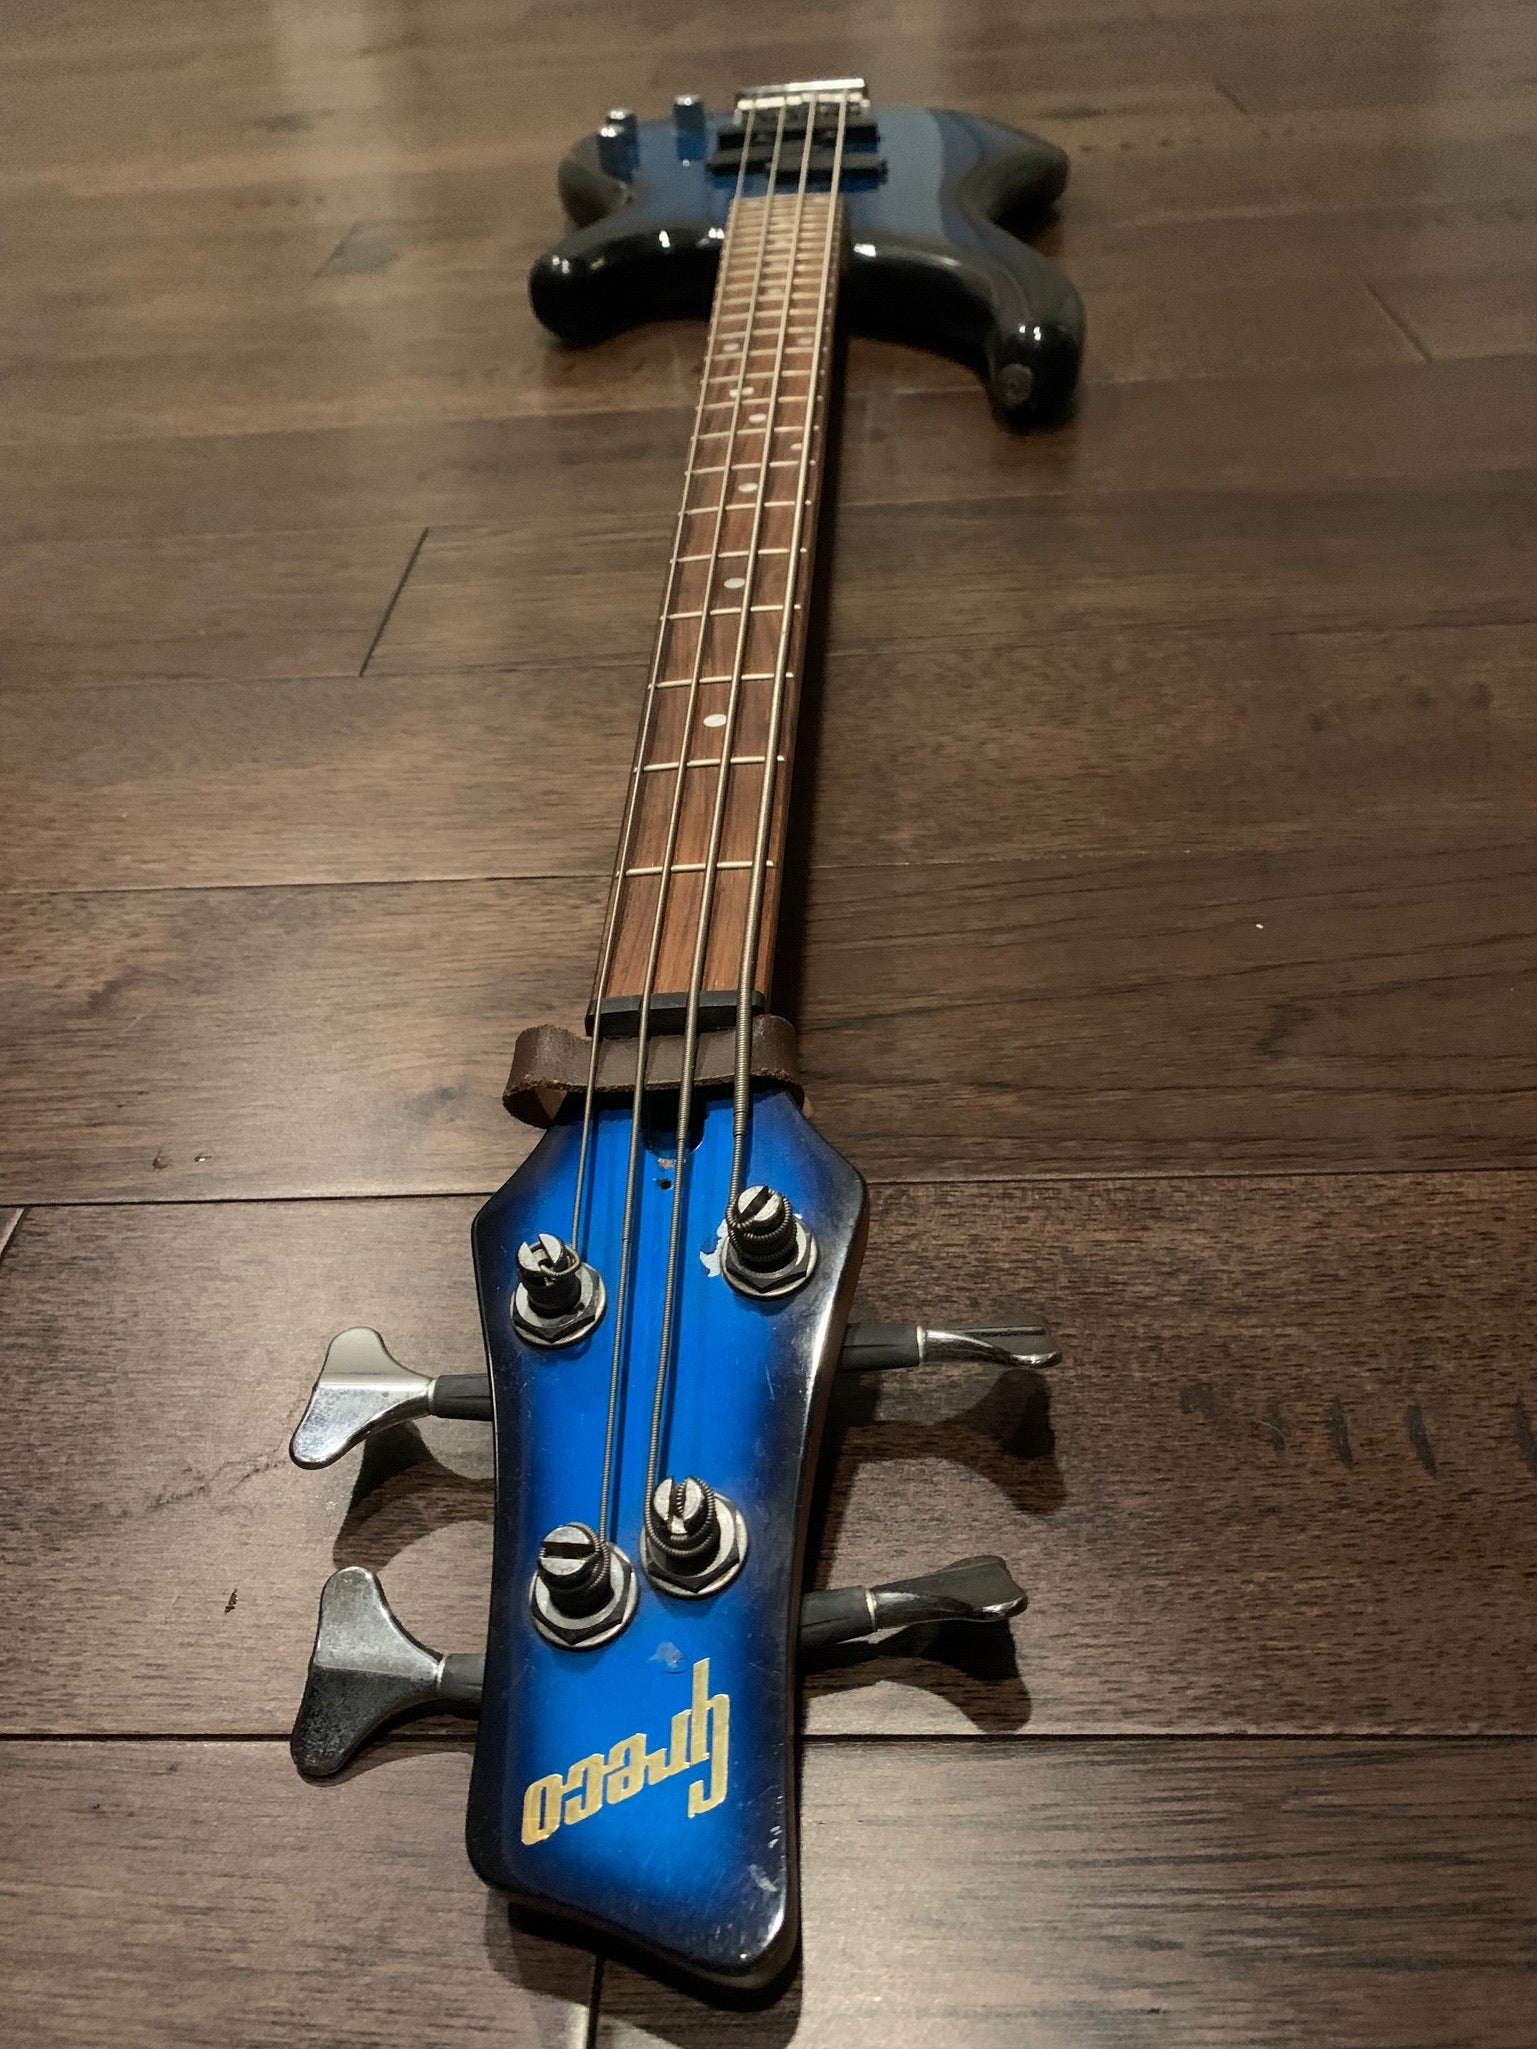 Greco Bass - precision PJB - Blue Burst - MIJ